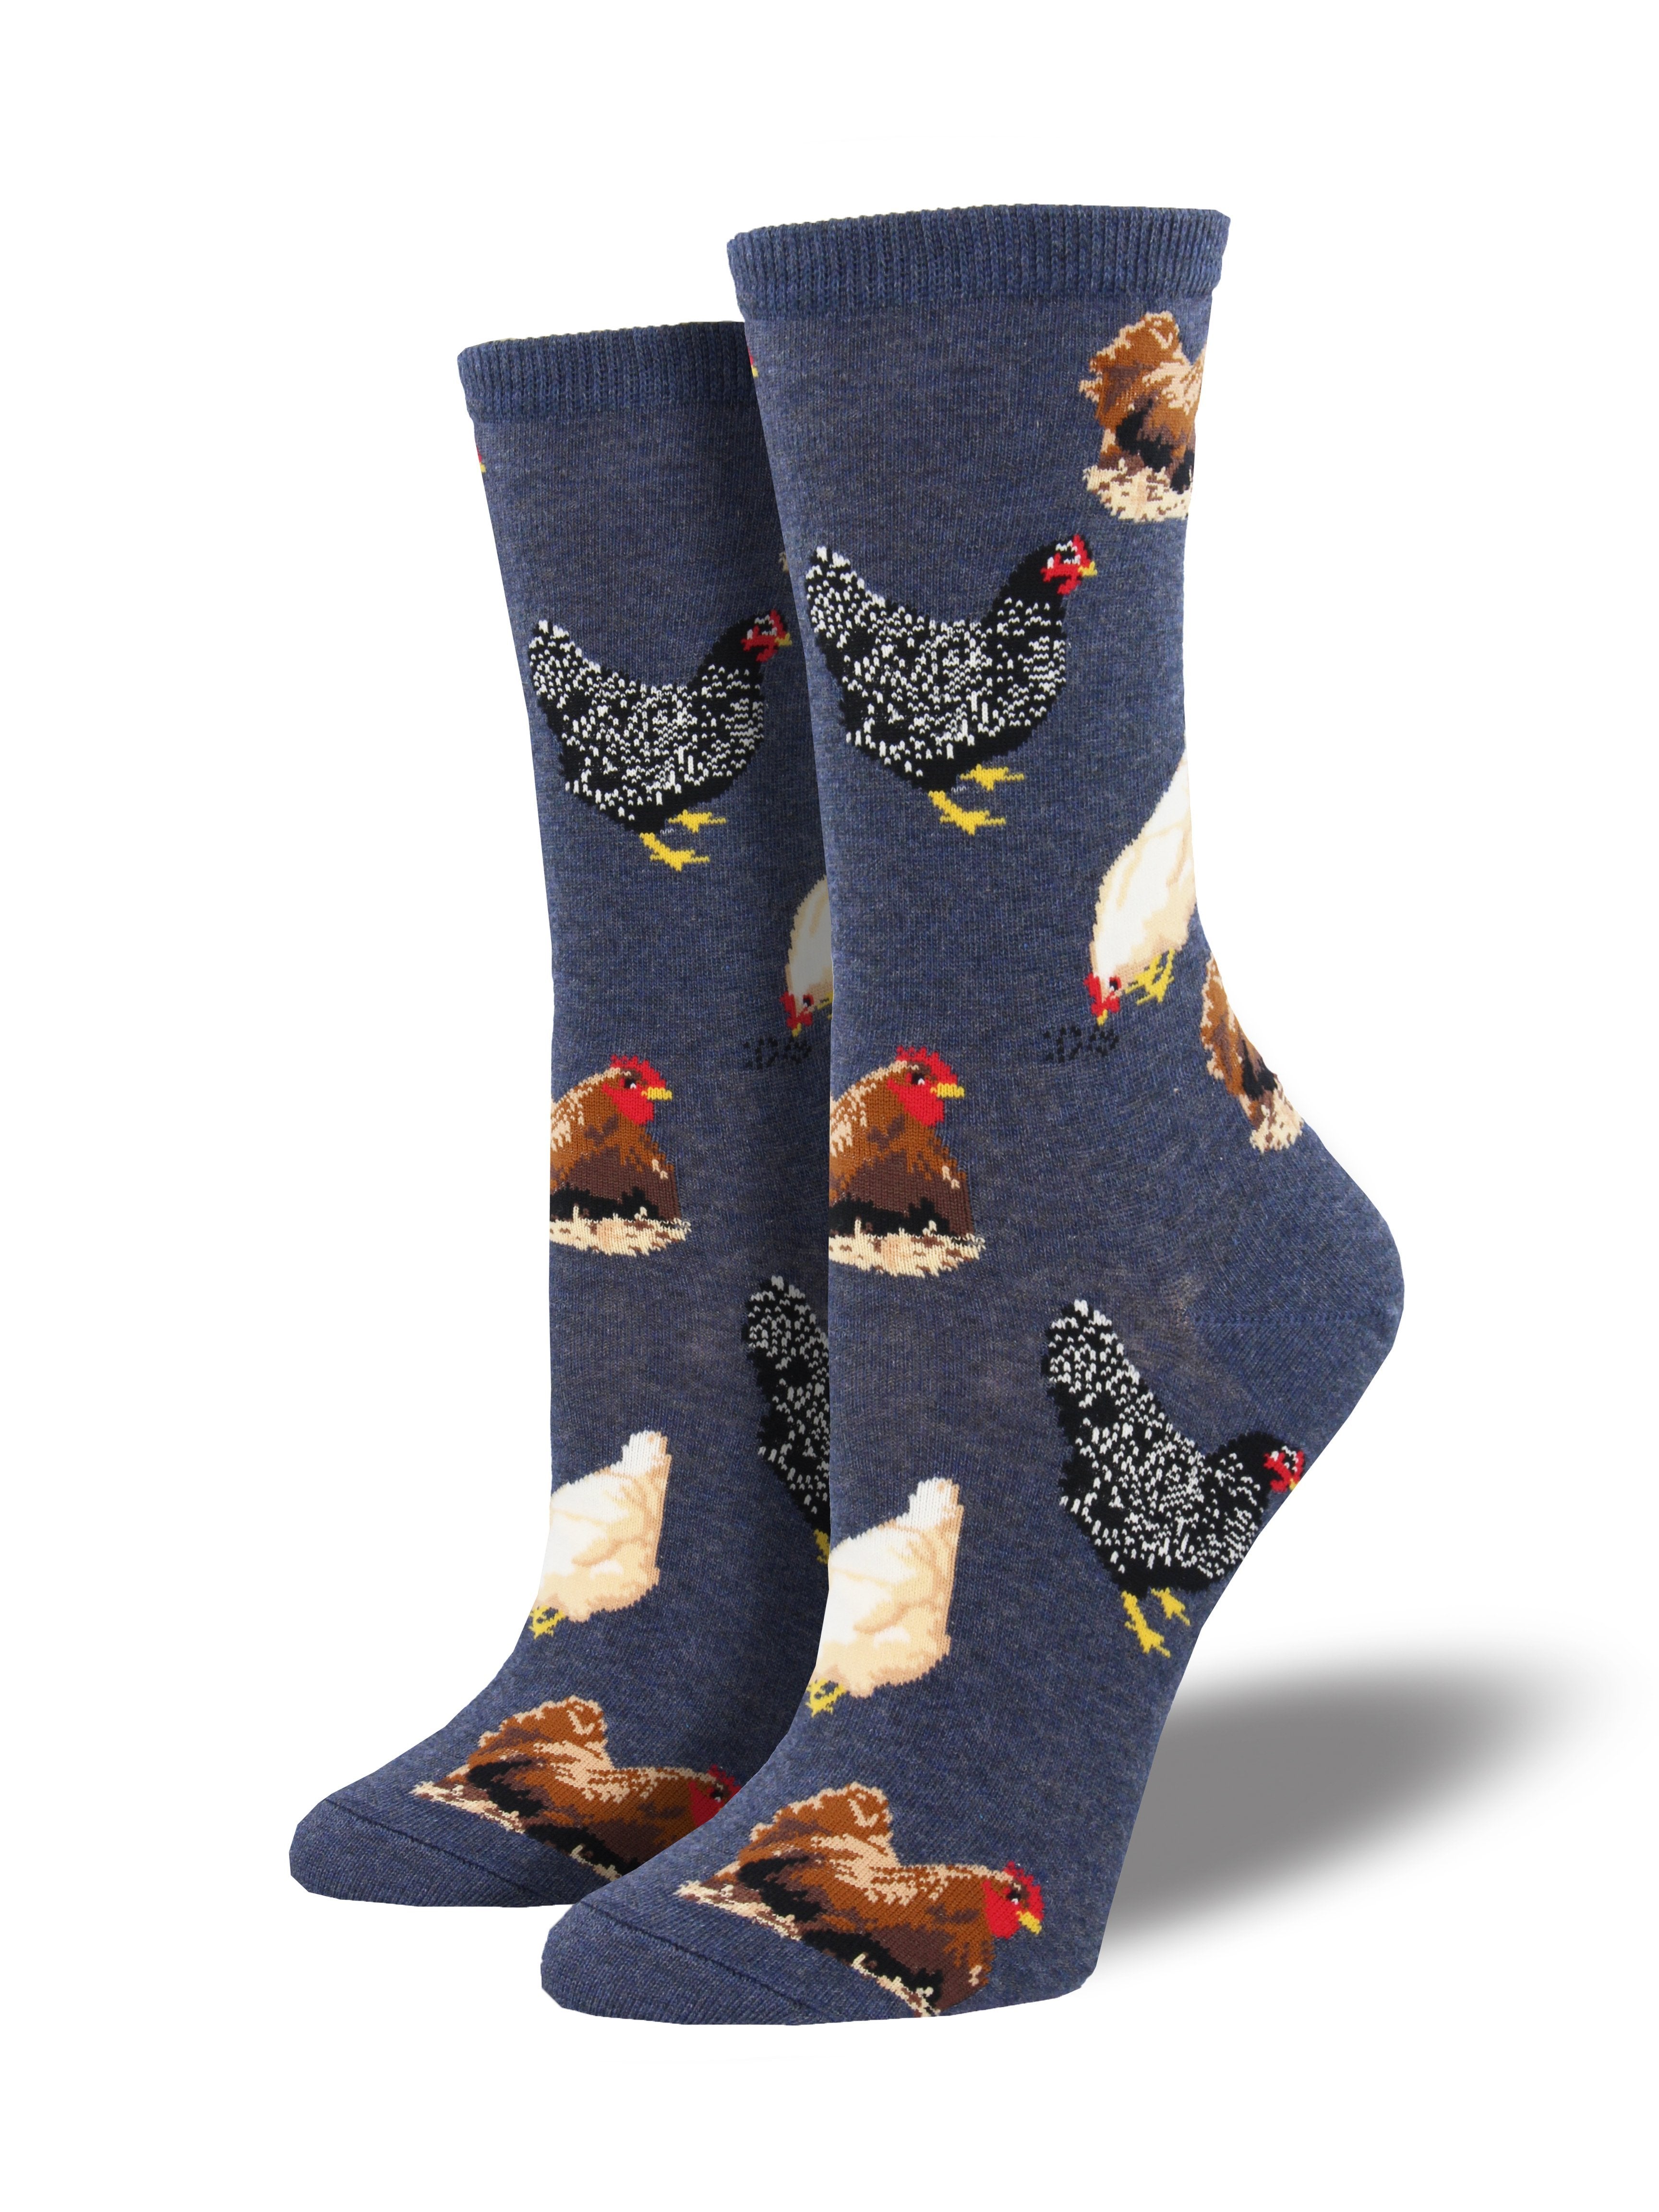 Women's "Hen House" Socks